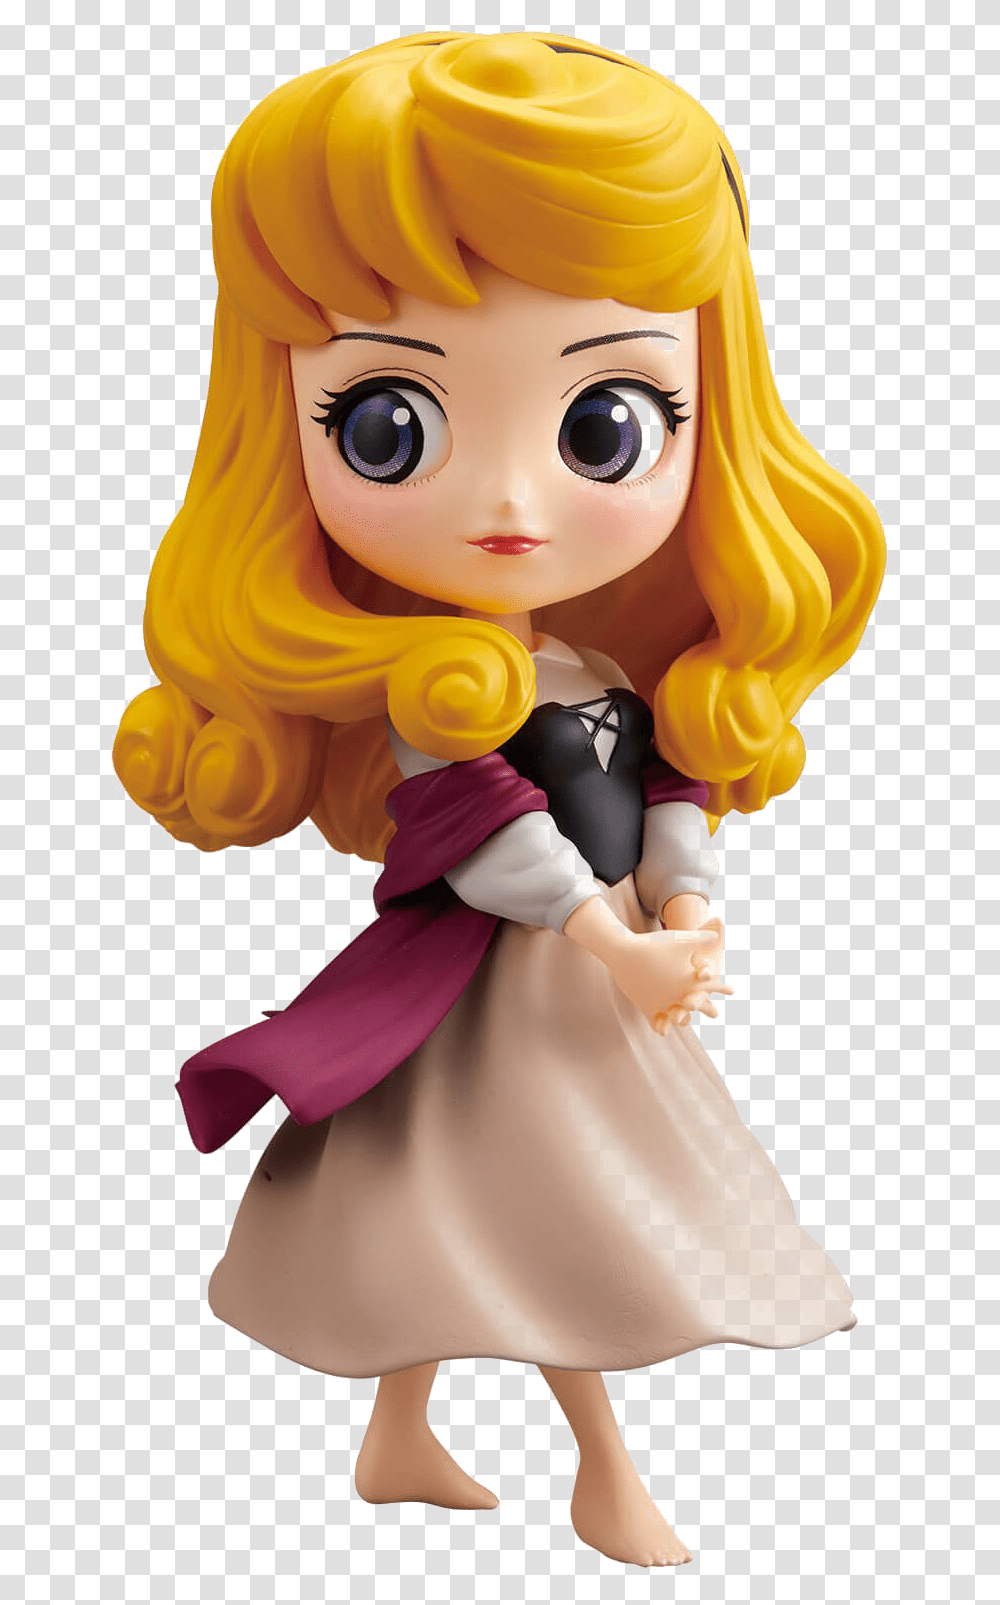 Princess Aurora Dress Image Background Aurora Princess, Doll, Toy, Barbie, Figurine Transparent Png